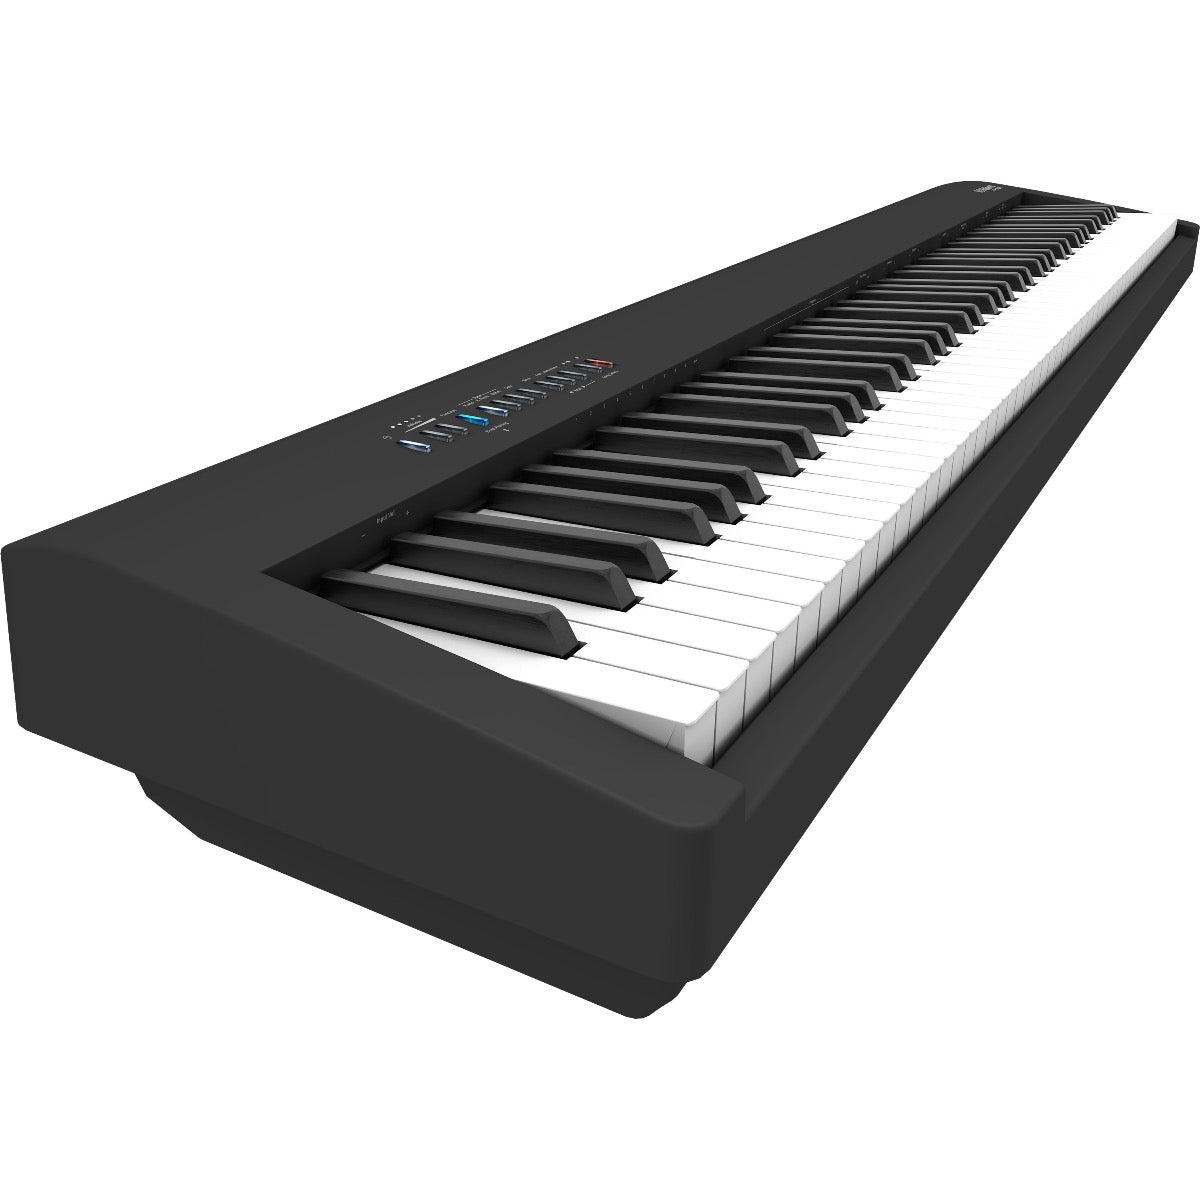 Roland FP-30X Digital Piano - Black STAGE ESSENTIALS BUNDLE – Kraft Music